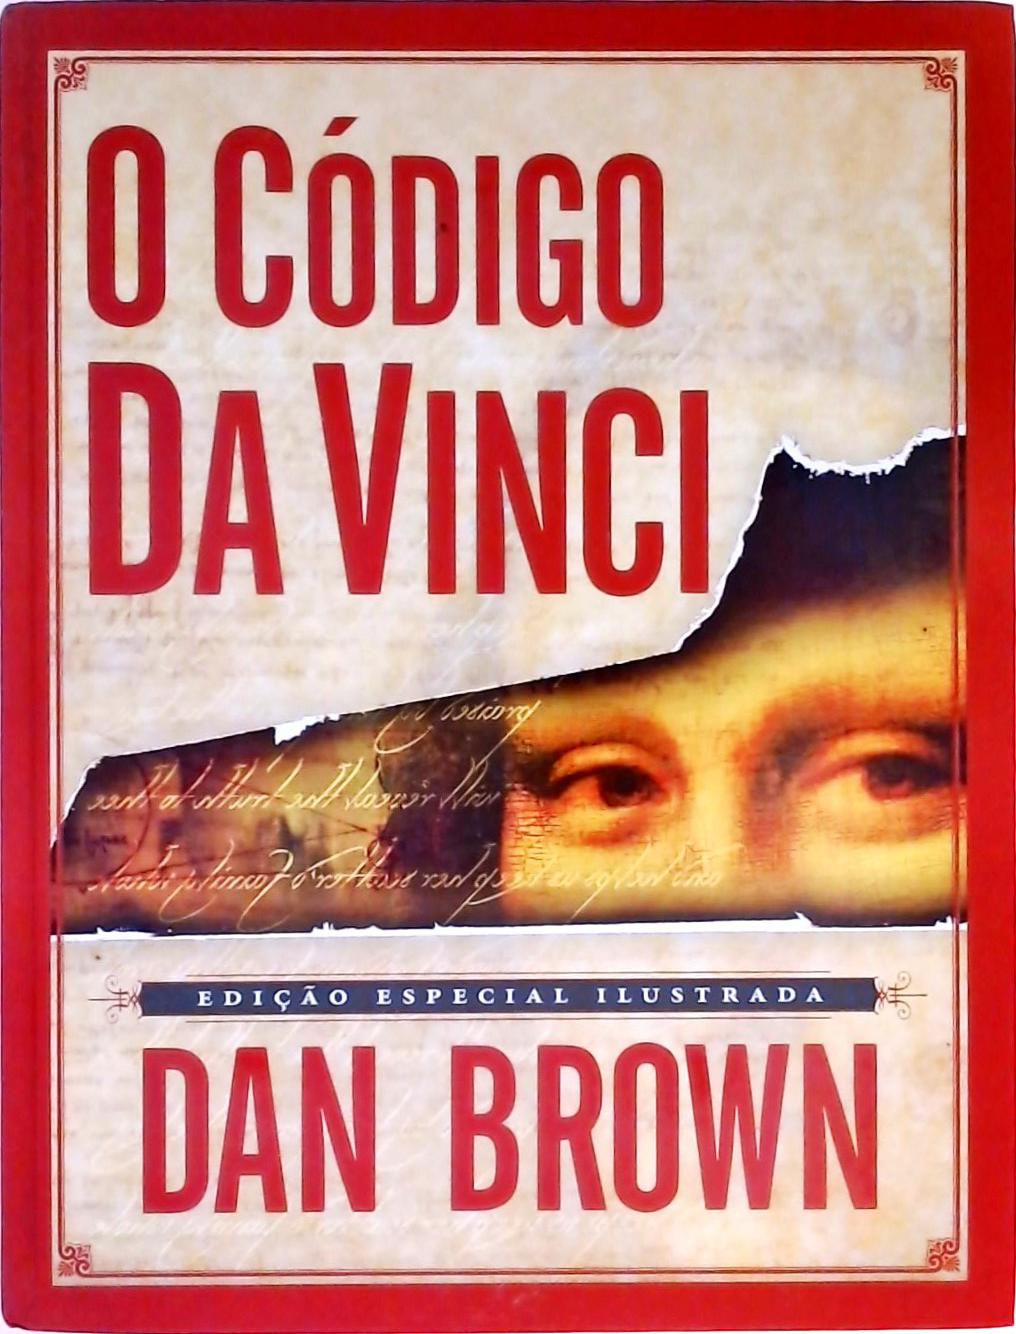 O Código Da Vinci